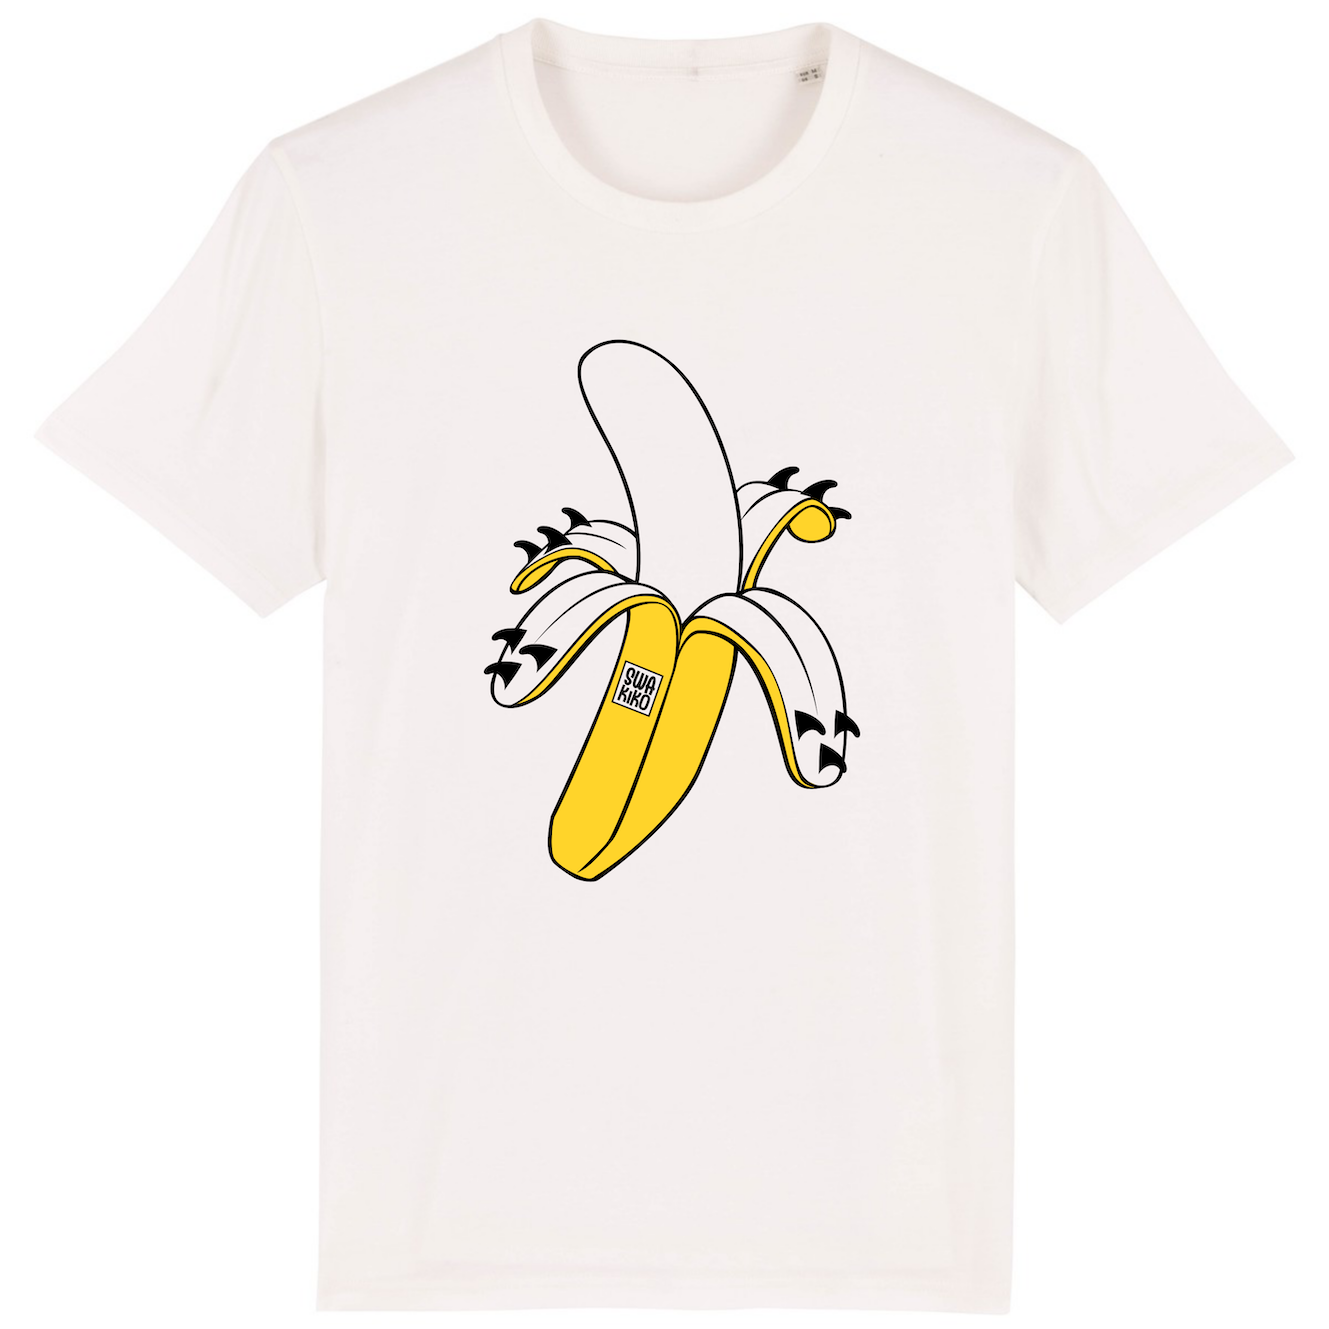 Surf t-shirt men white, Banana surf